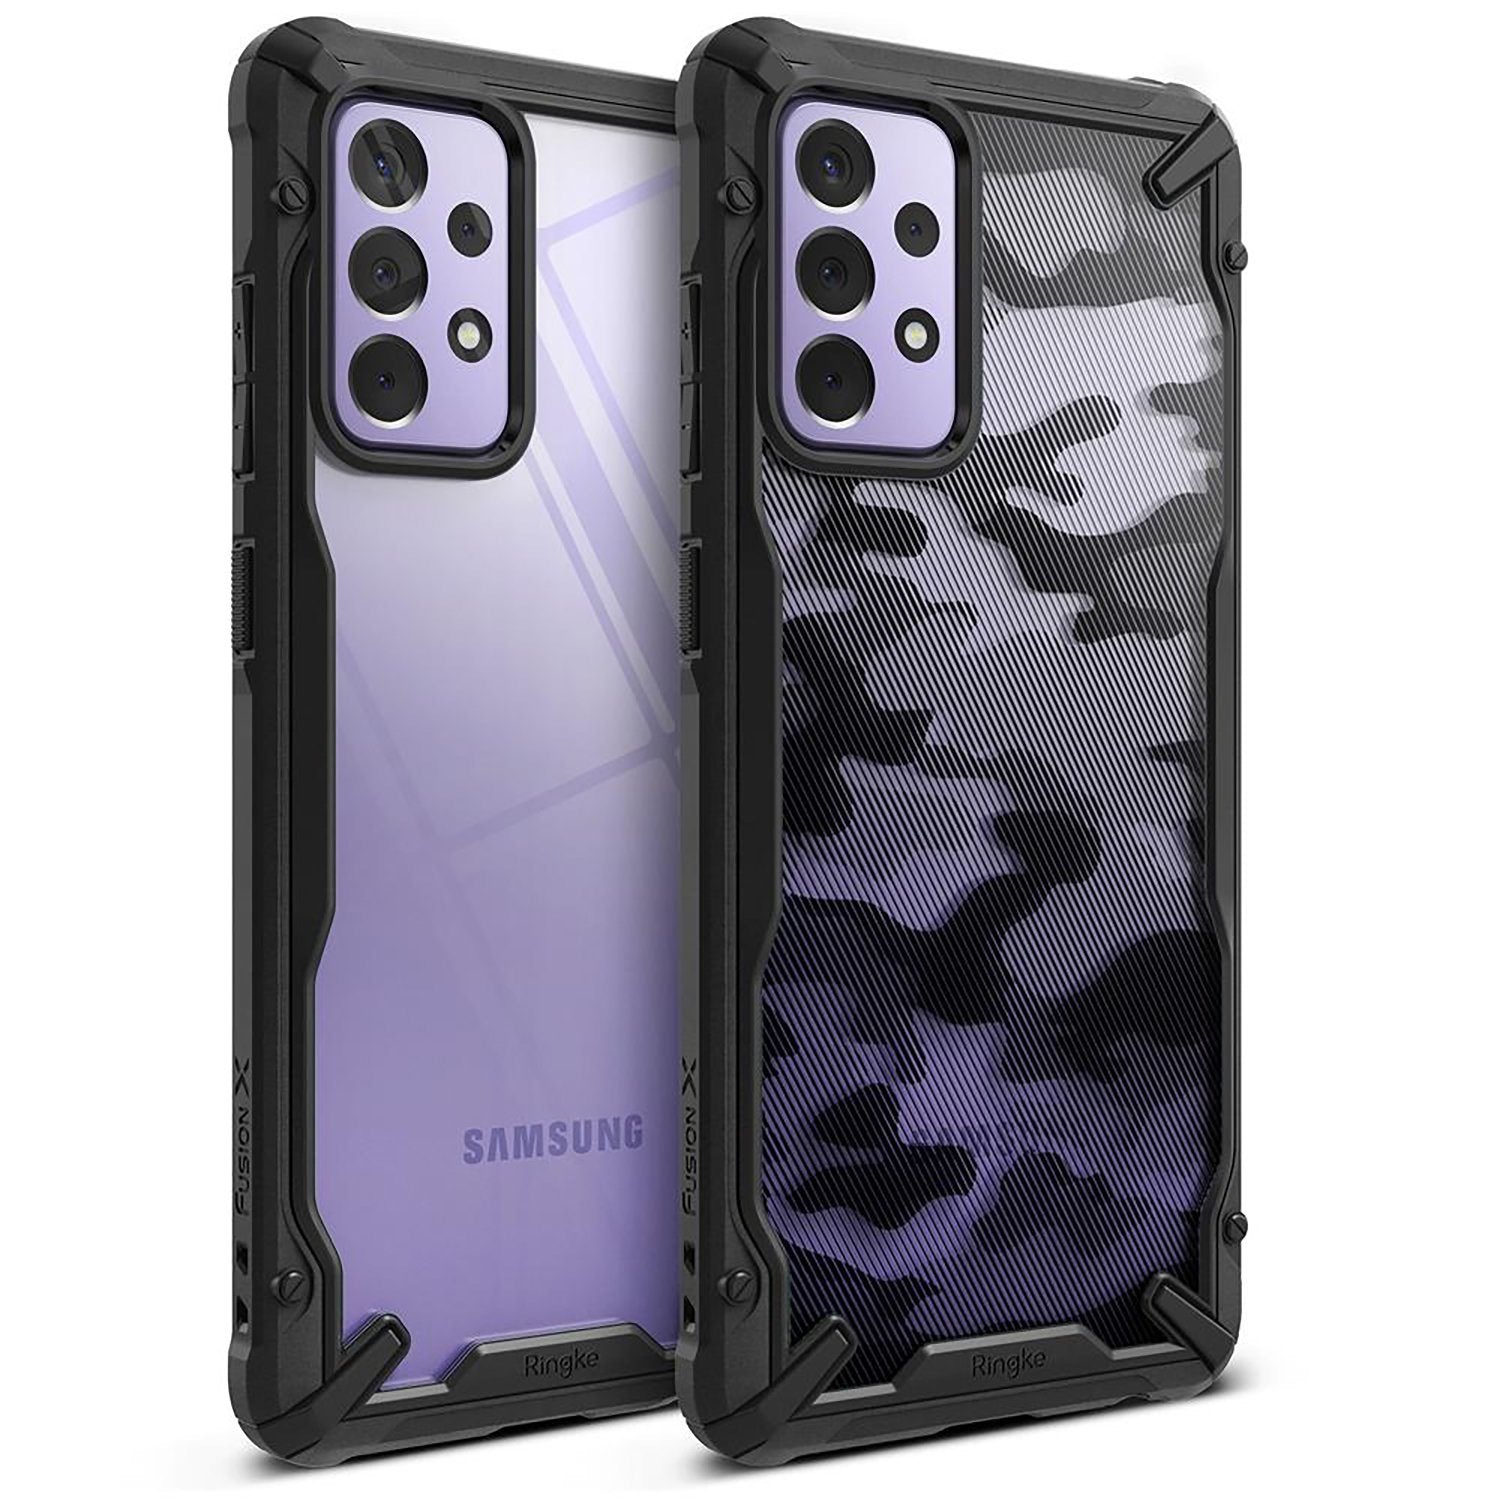 Ringke Fusion X Case for Samsung Galaxy A72, Black Default Ringke 